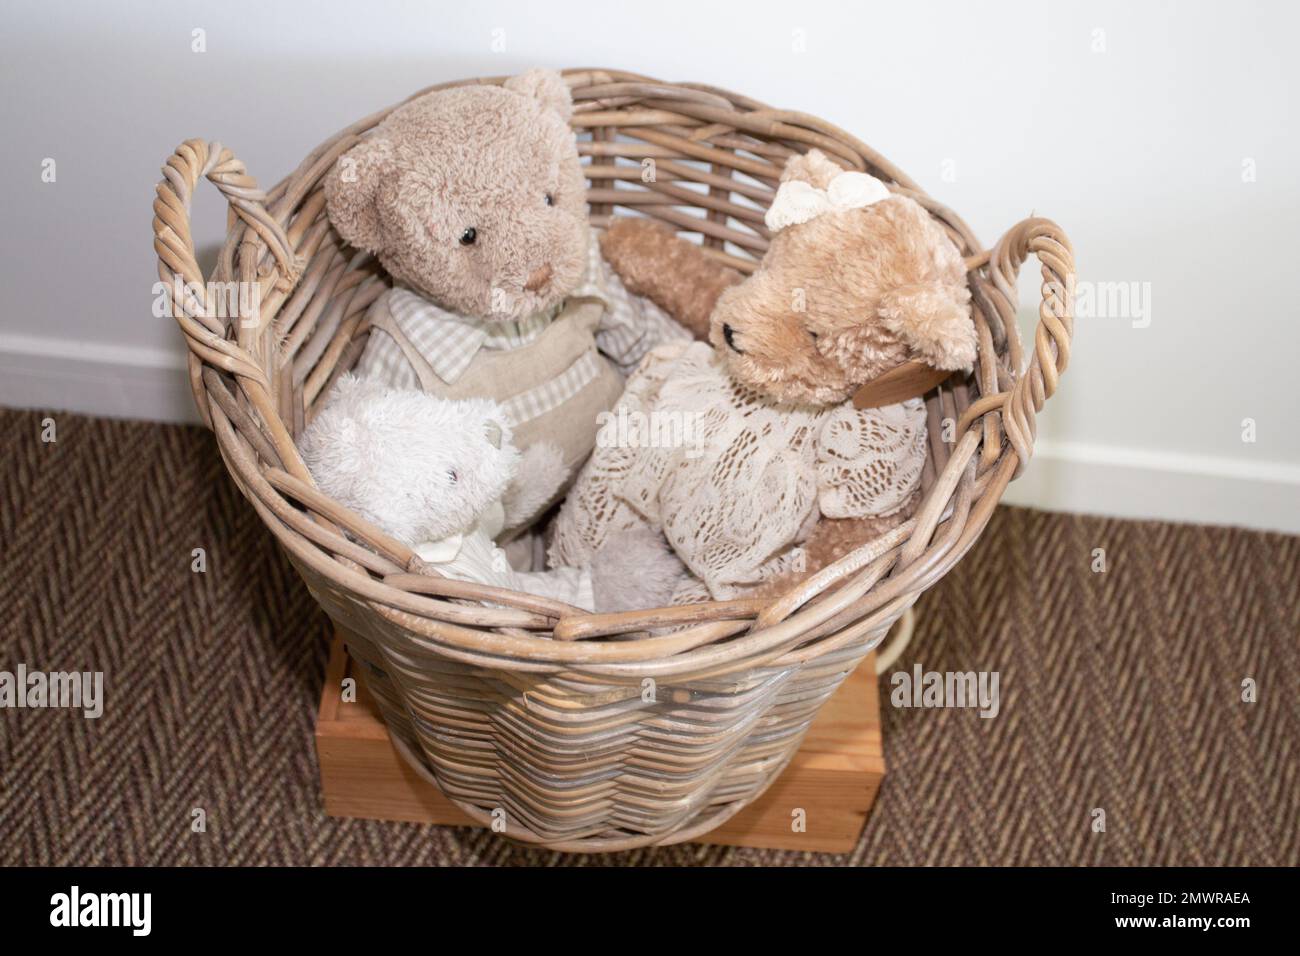 straw basket of stuffed animals vintage teddy bears Stock Photo